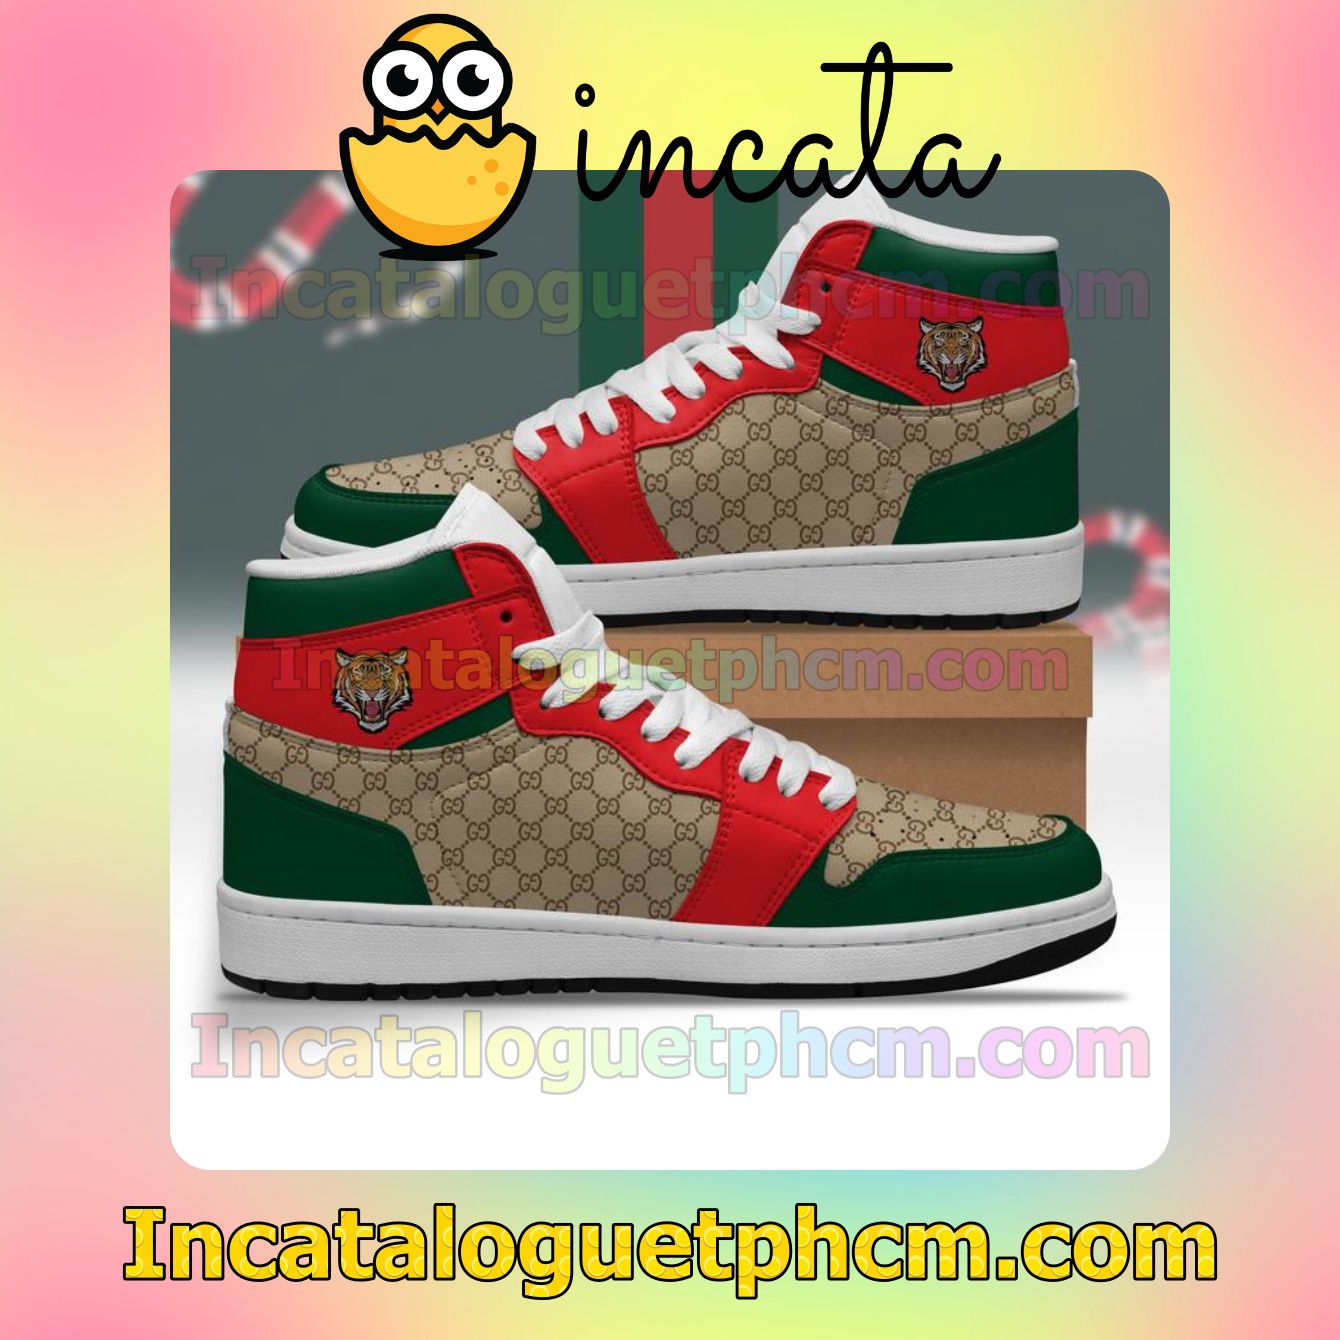 Gucci Tiger Air Jordan 1 Inspired Shoes